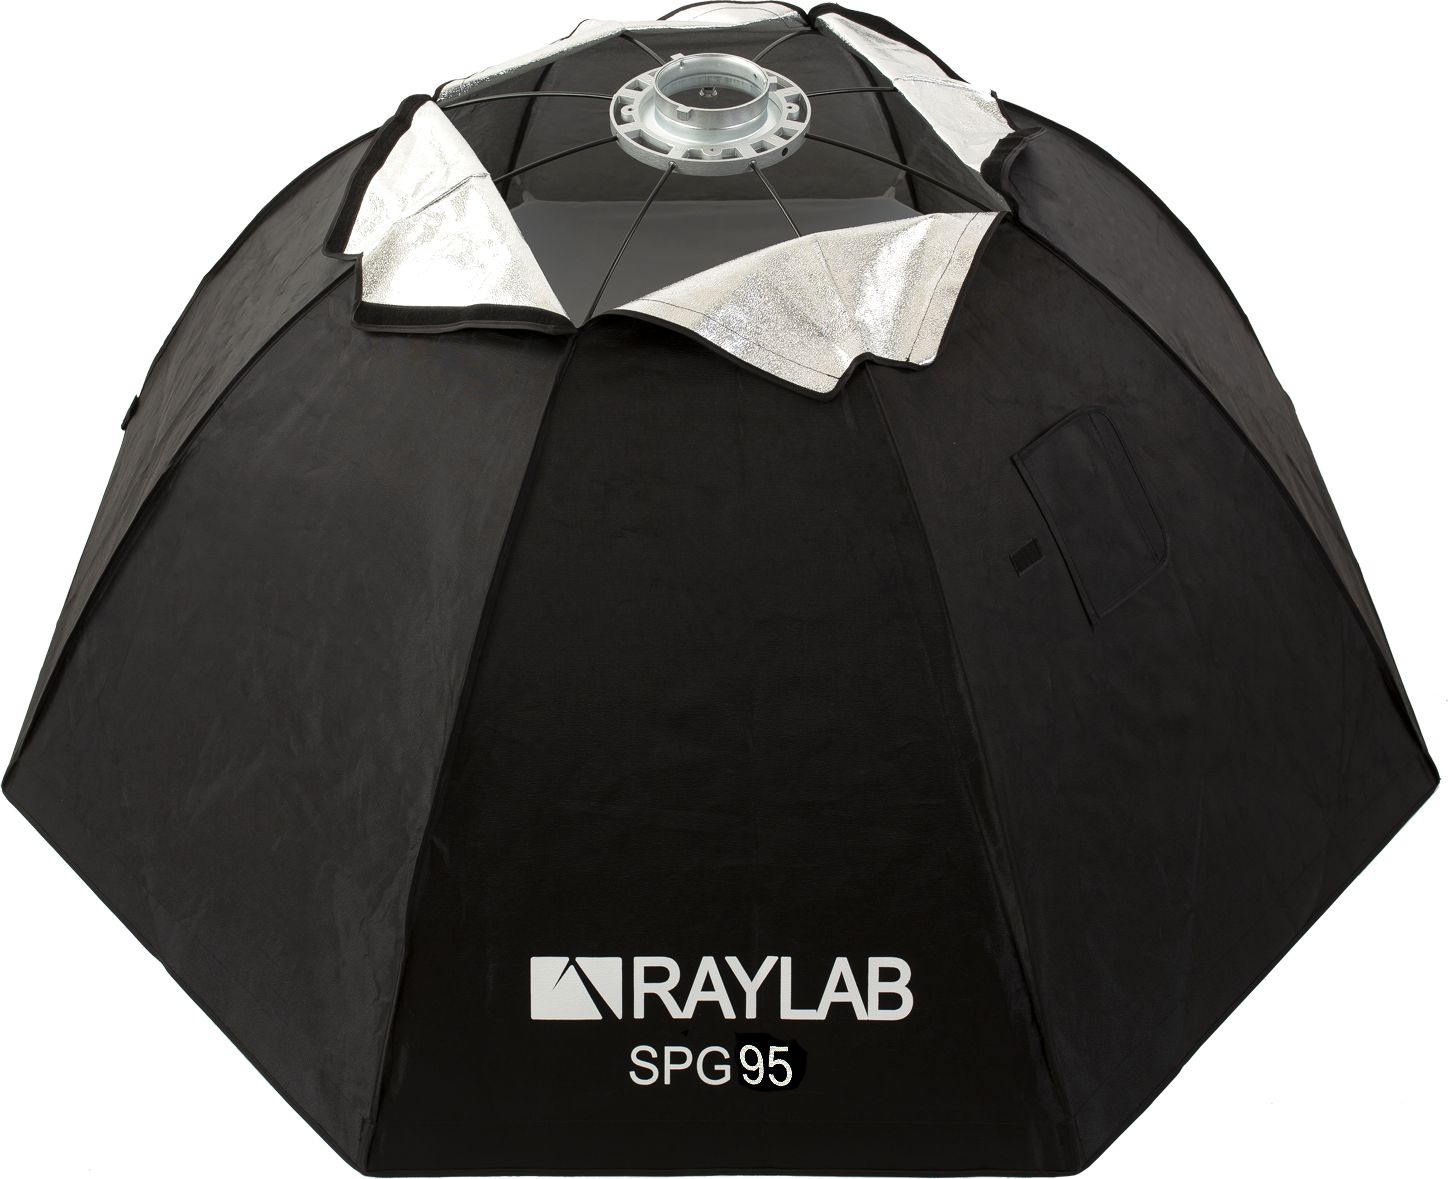   Raylab SPG95     Ultra-mart